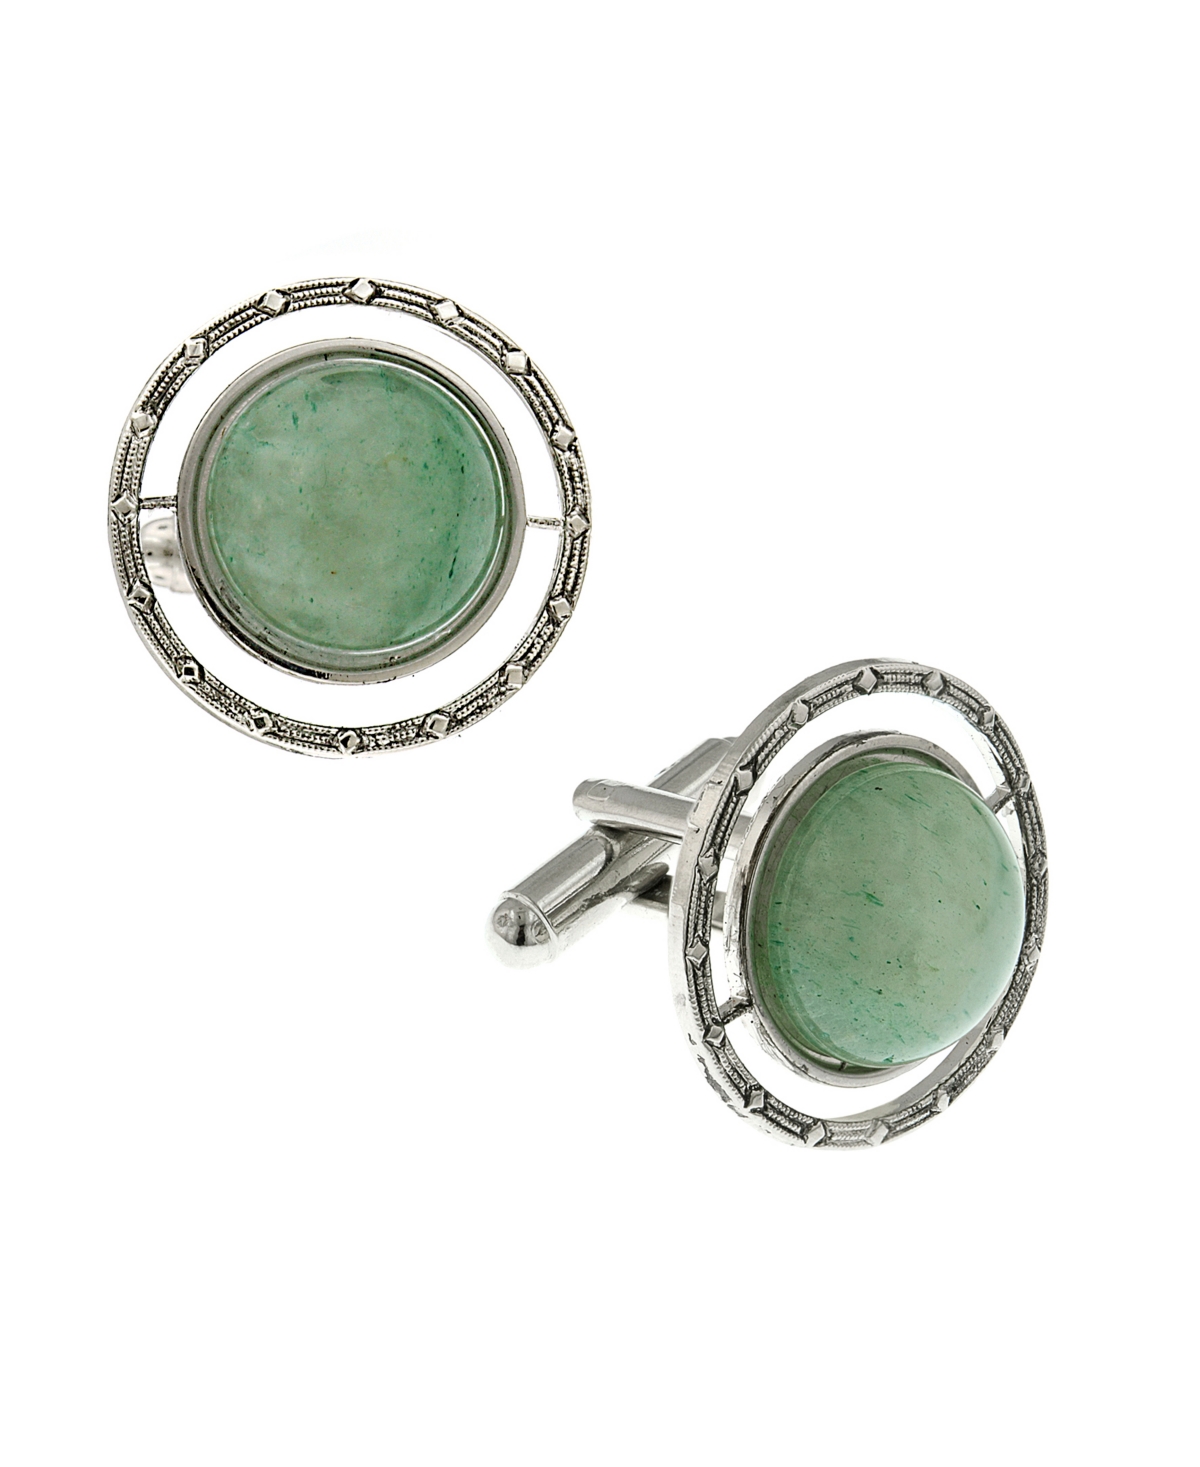 Jewelry Silver-Tone Semi-Precious Jade Round Cufflinks - Green